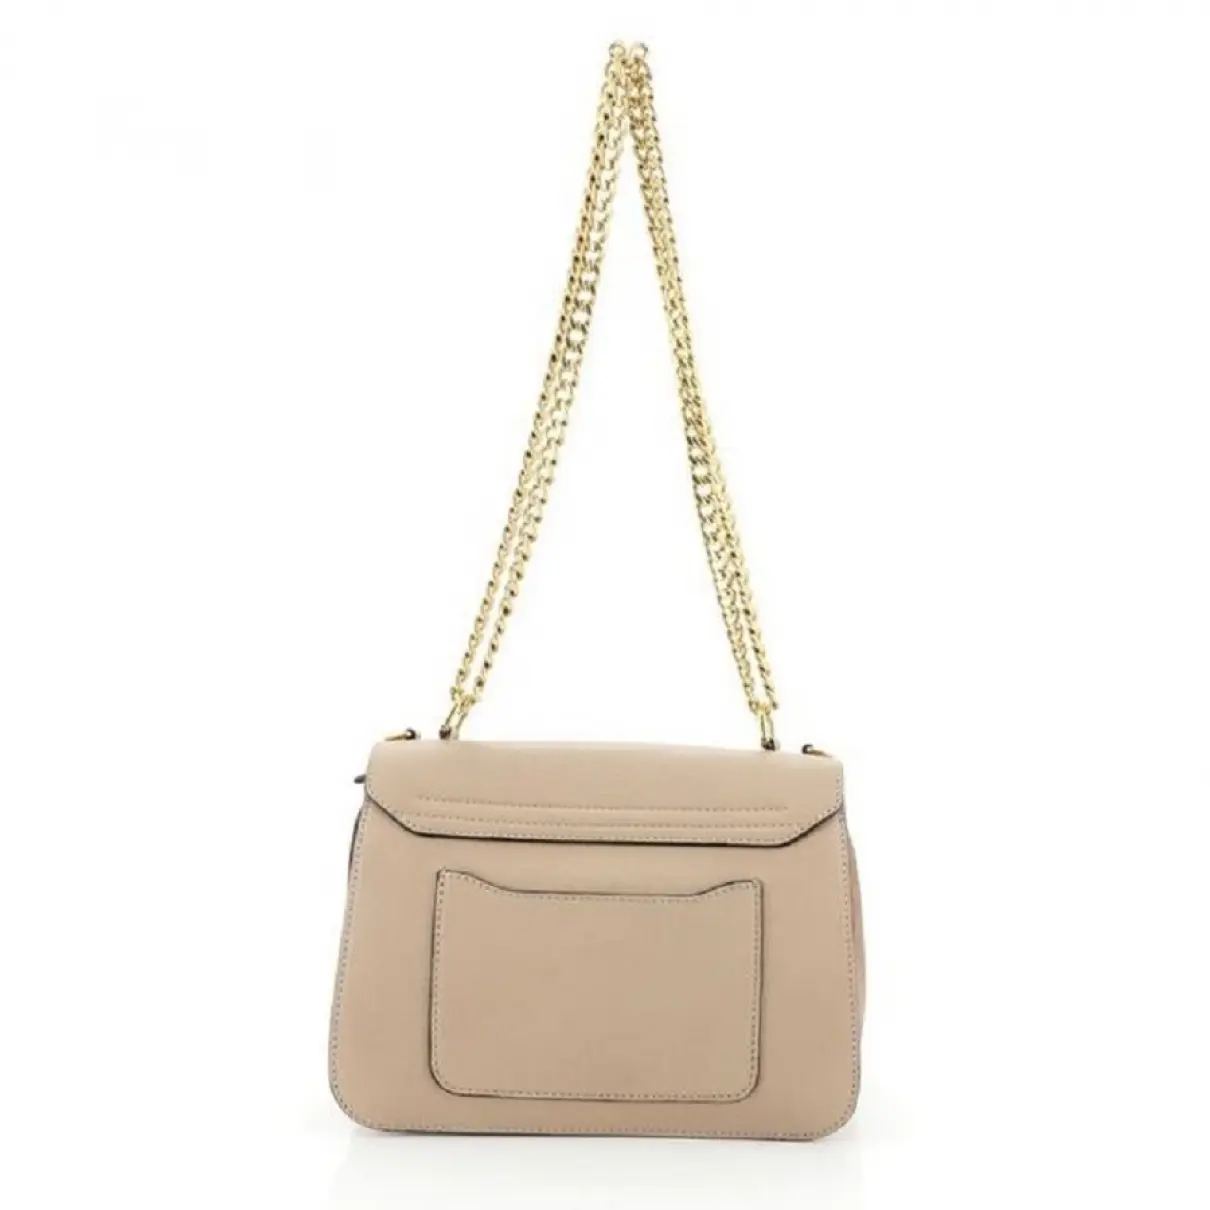 Buy Chloé Mily leather handbag online